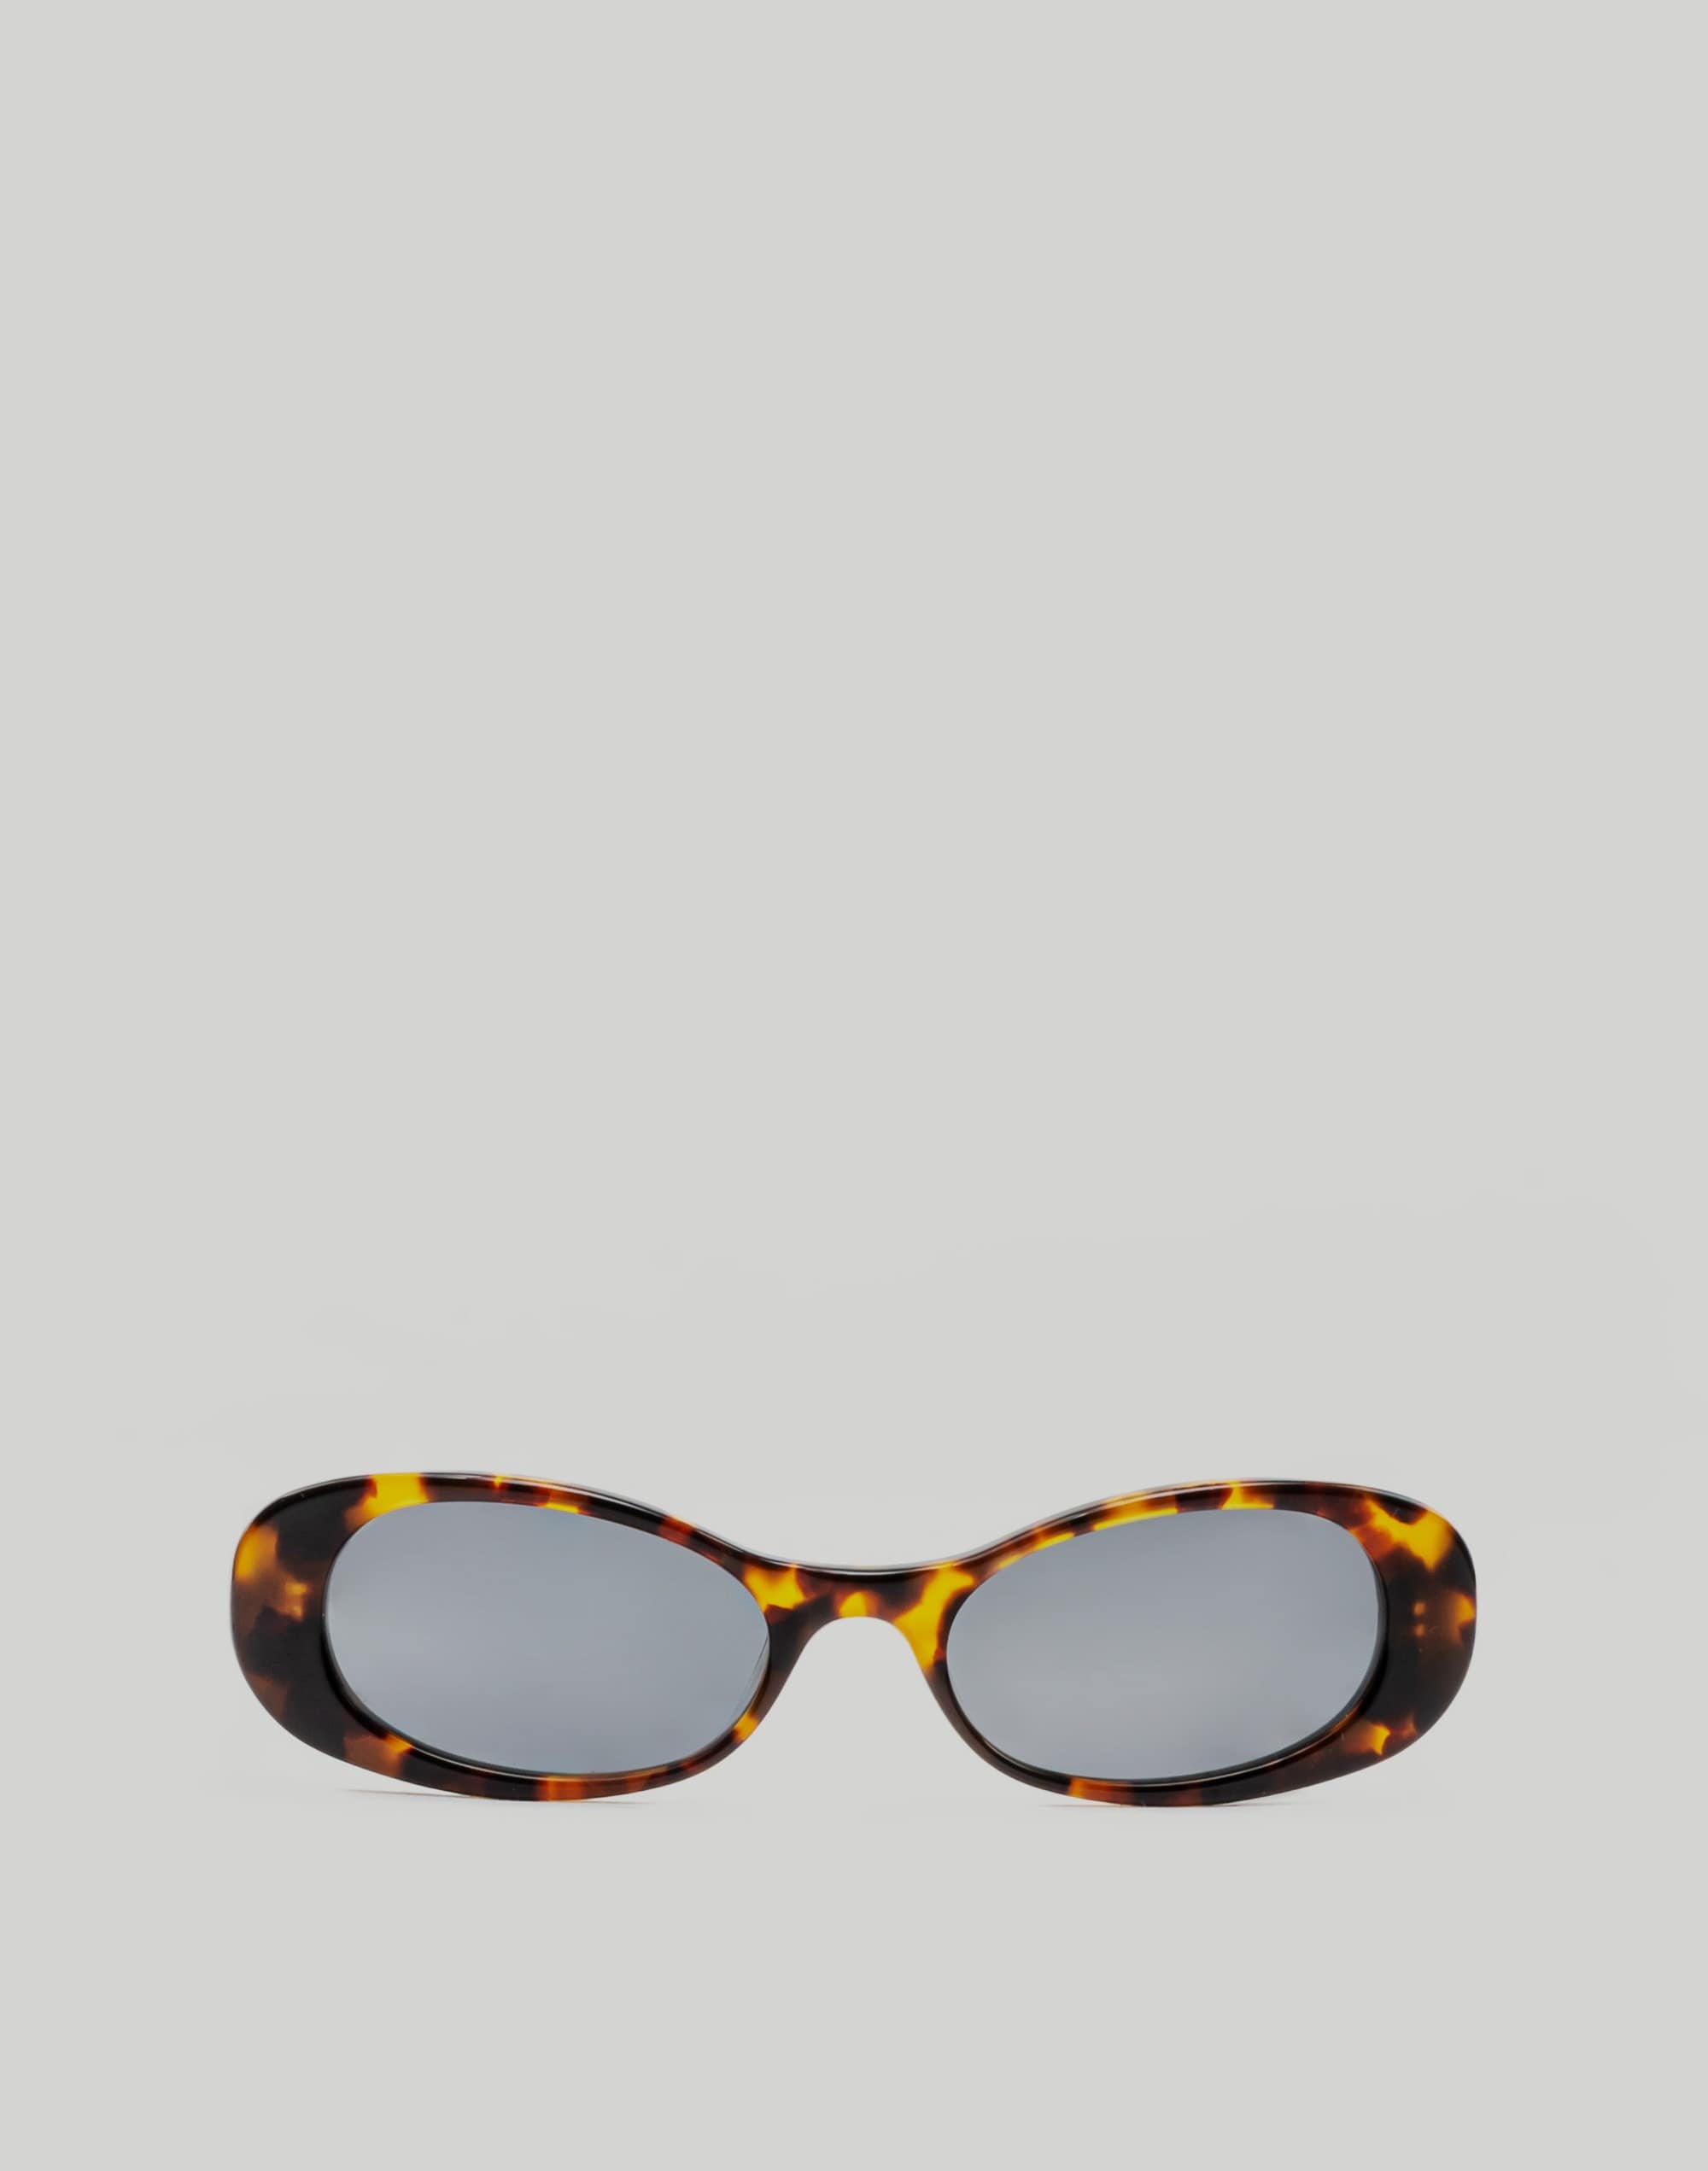 Maguire Brooklyn Tortoise Sunglasses